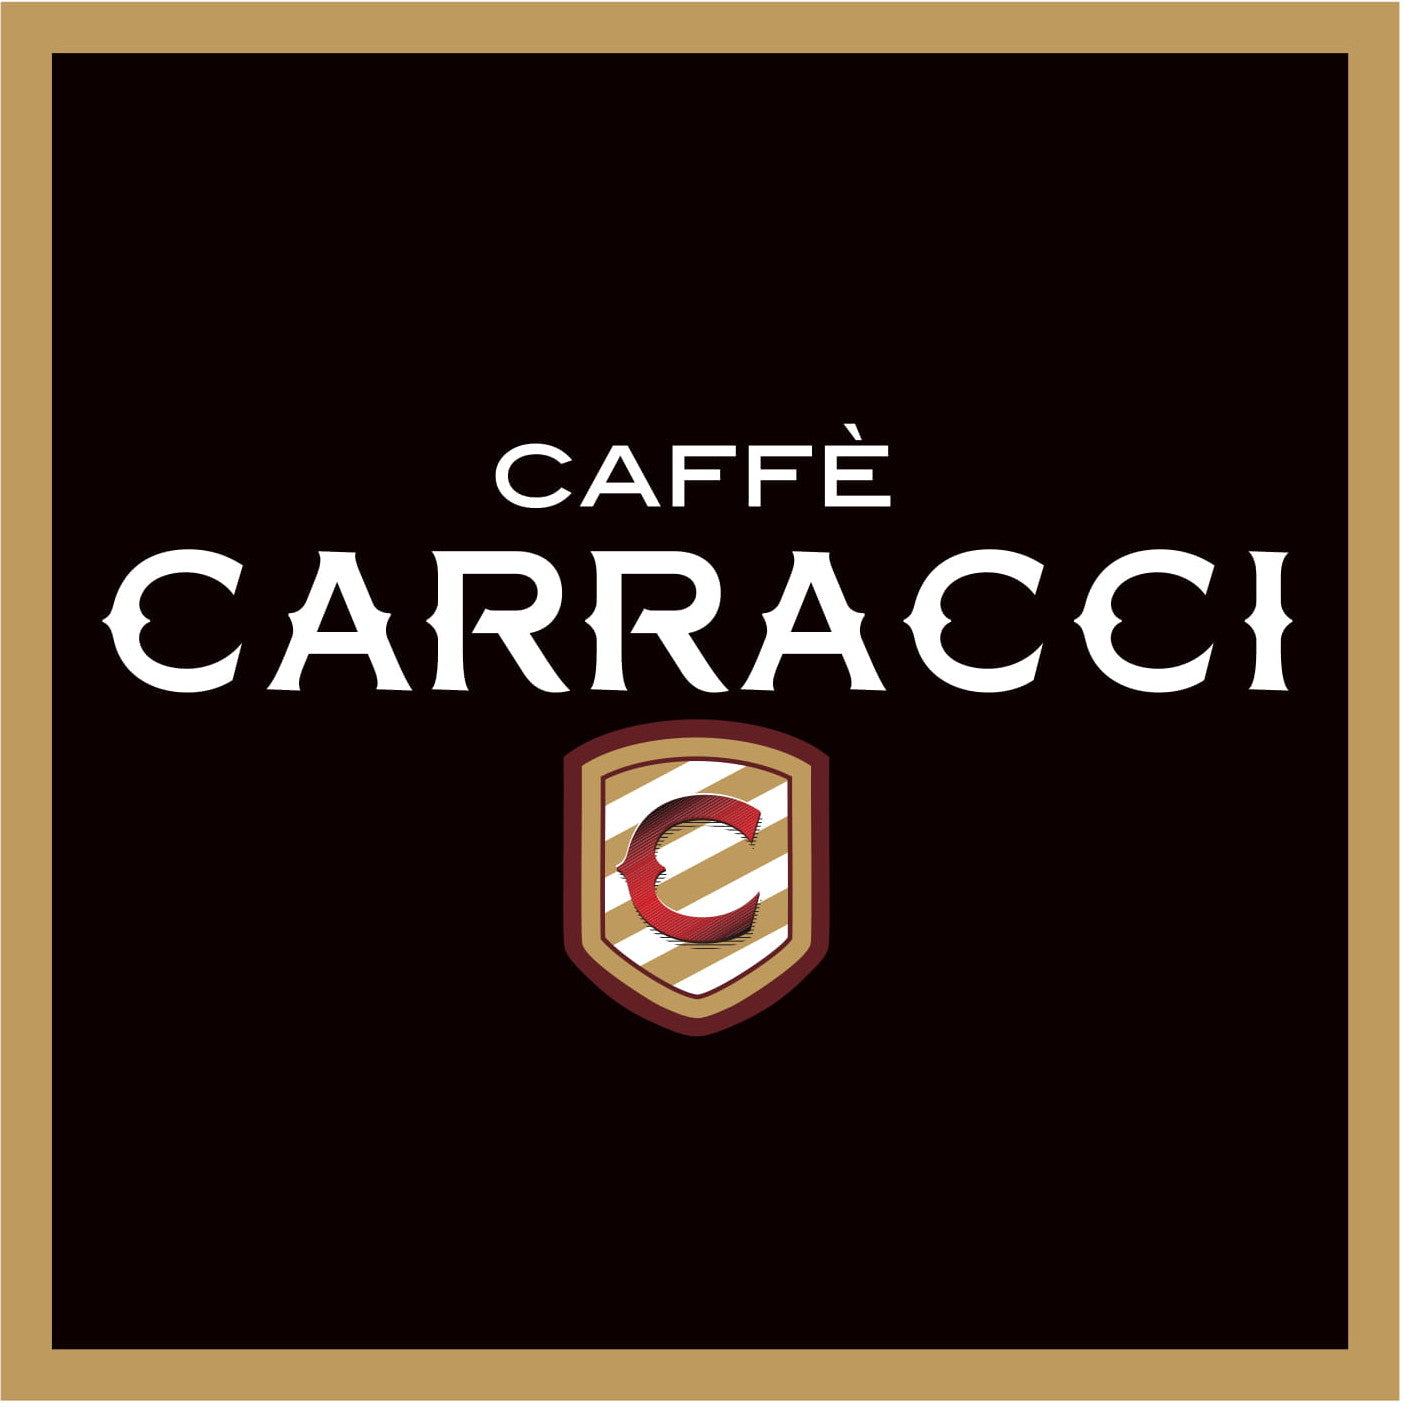 Caffe Carracci